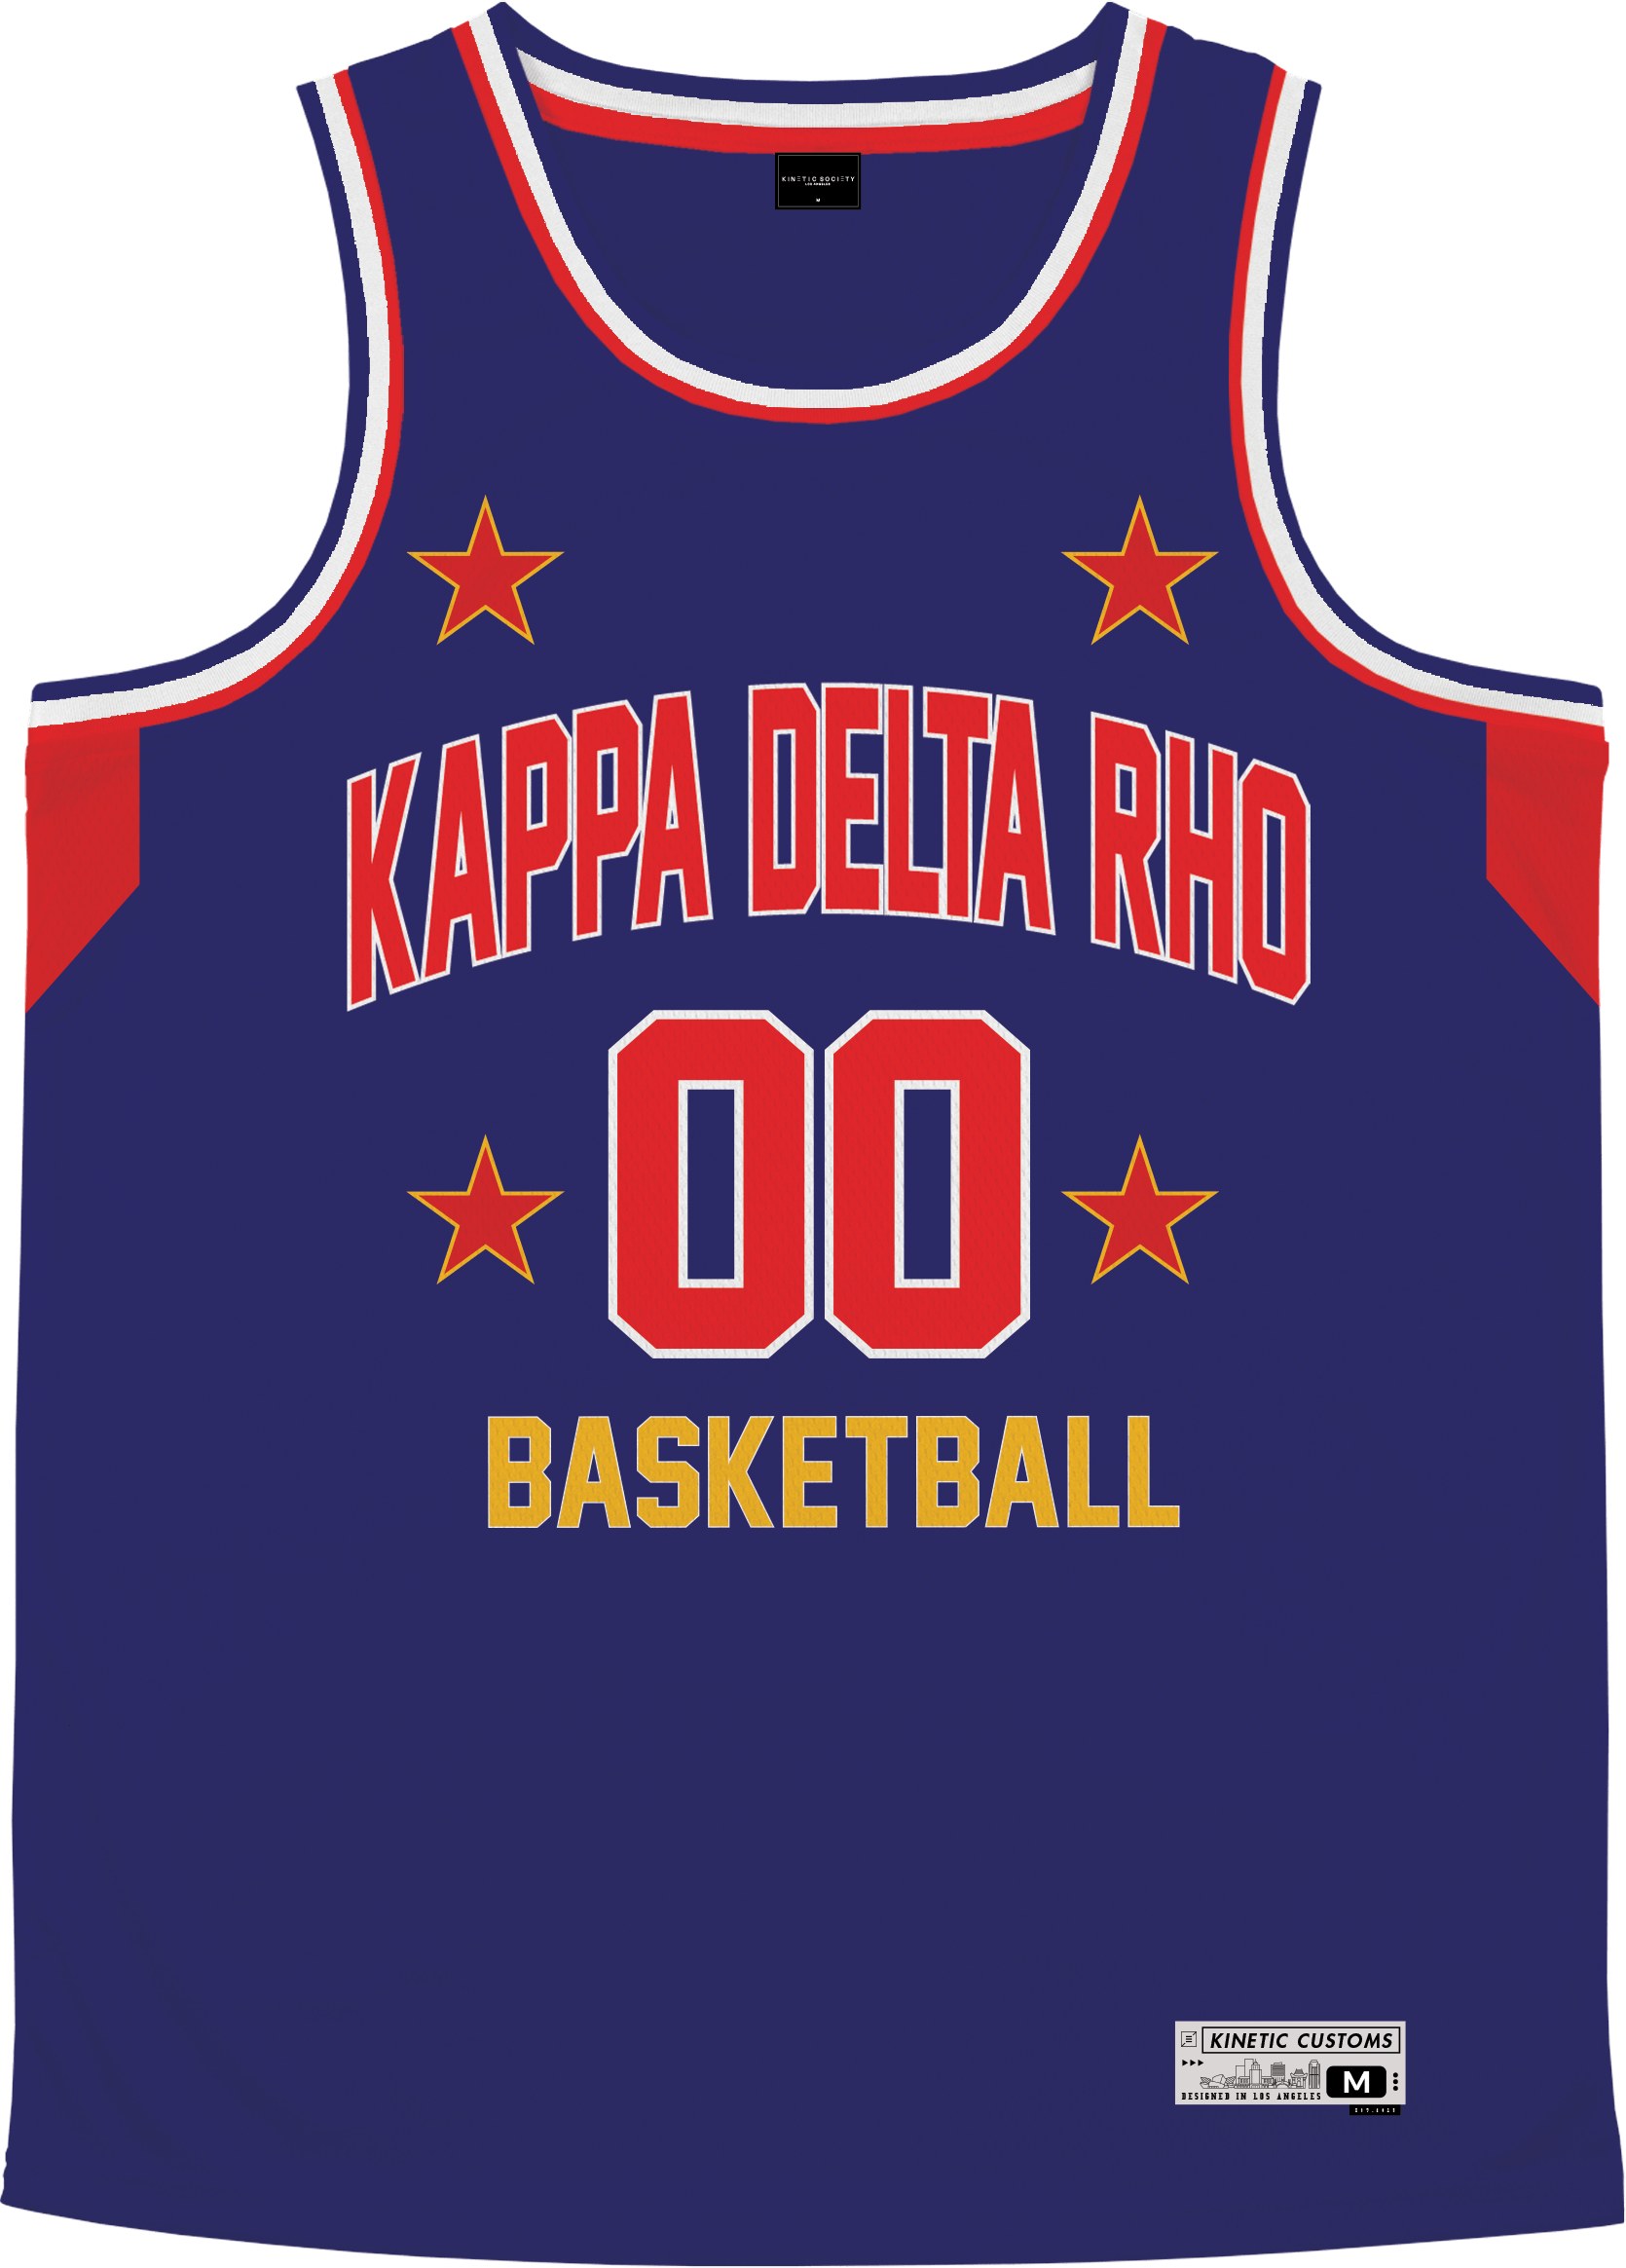 Kappa Delta Rho - Retro Ballers Basketball Jersey Premium Basketball Kinetic Society LLC 